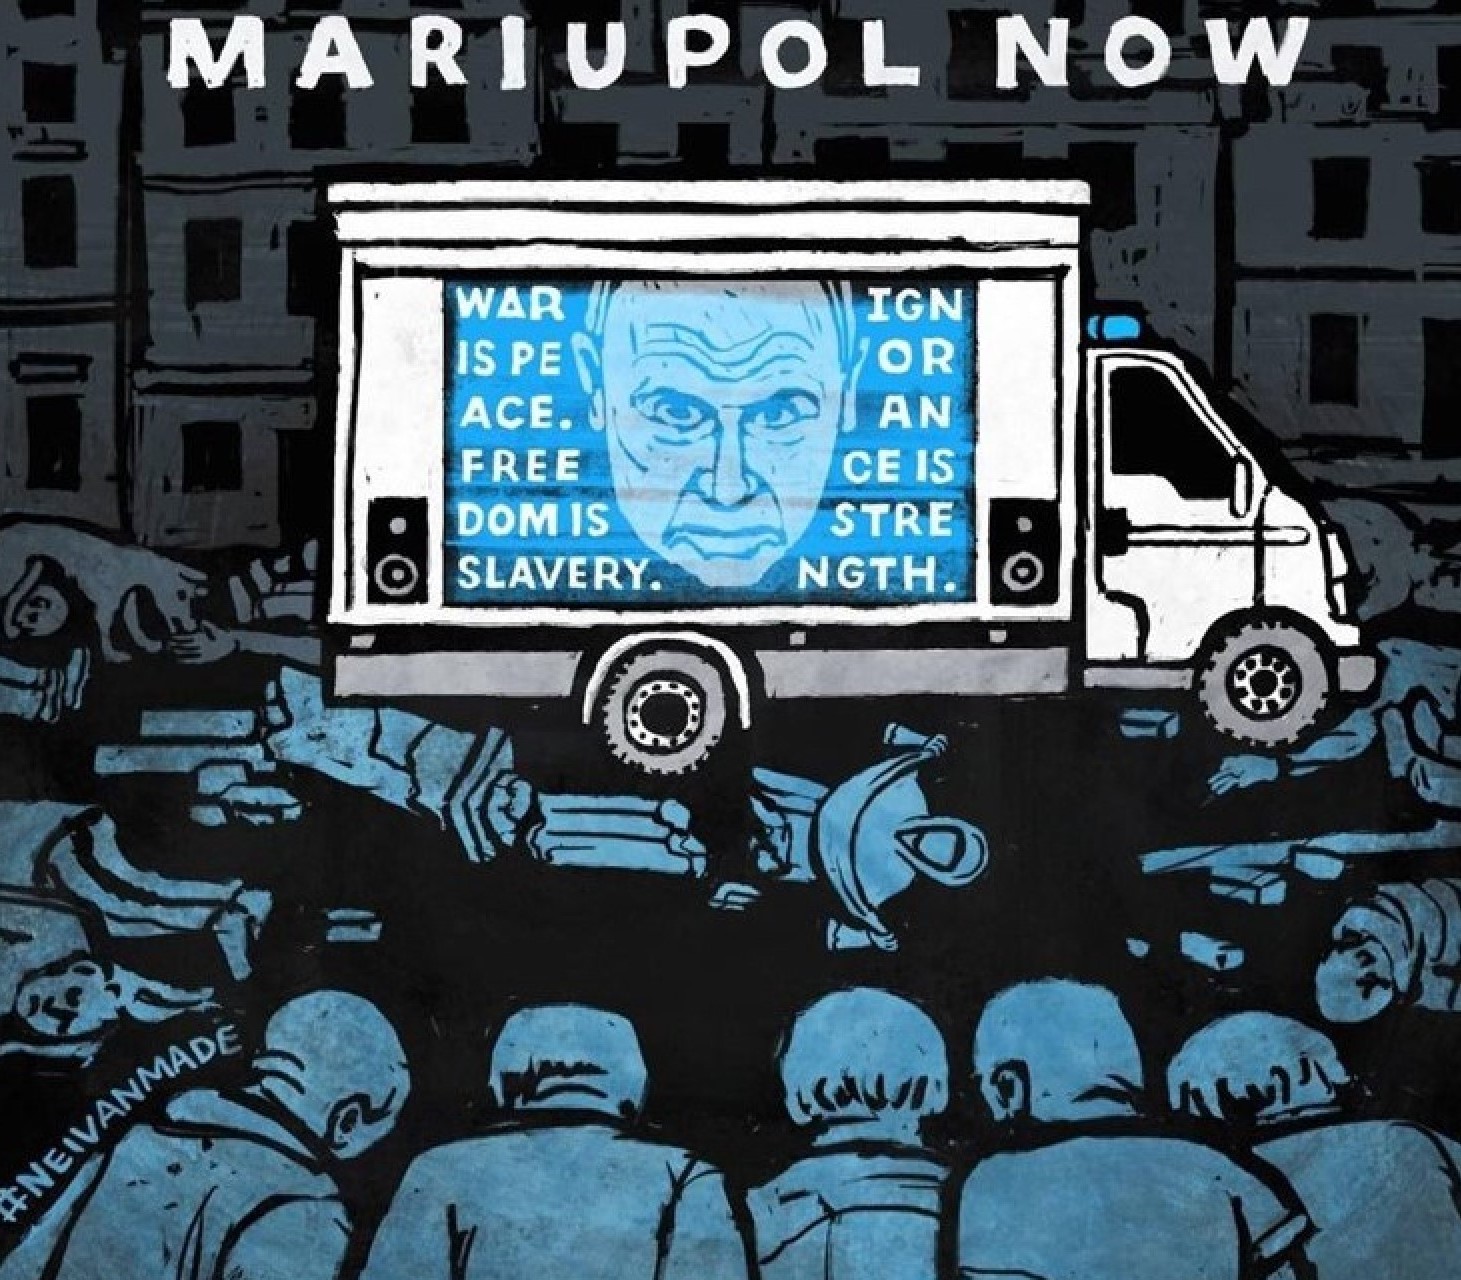 Russia’s Mariupol propaganda Image by Mykhailo Skop, Mariupol Today